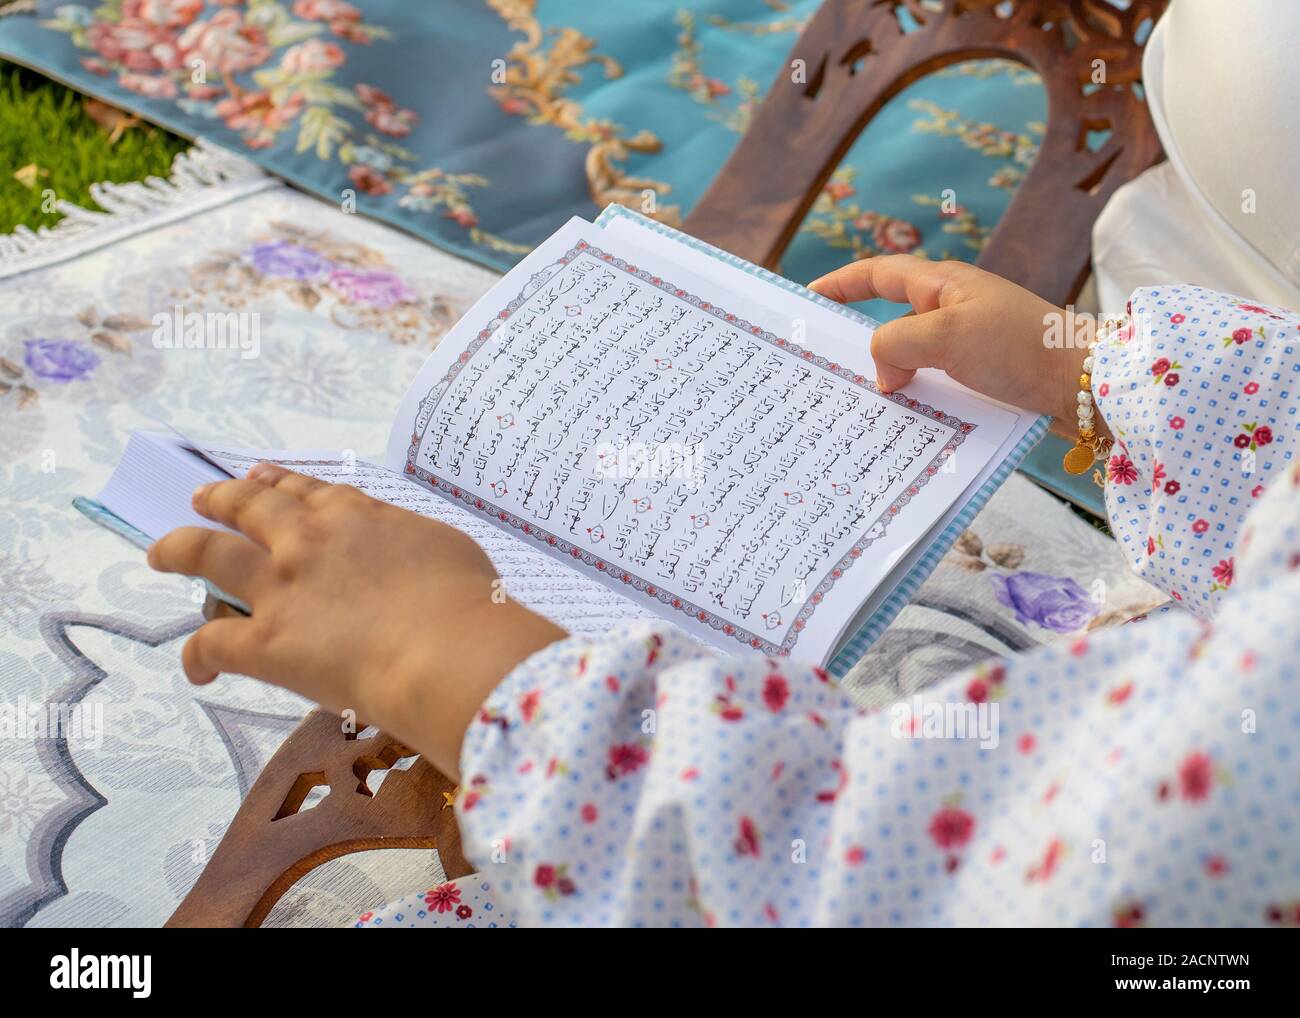 A Muslim Girl reading quran Stock Photo